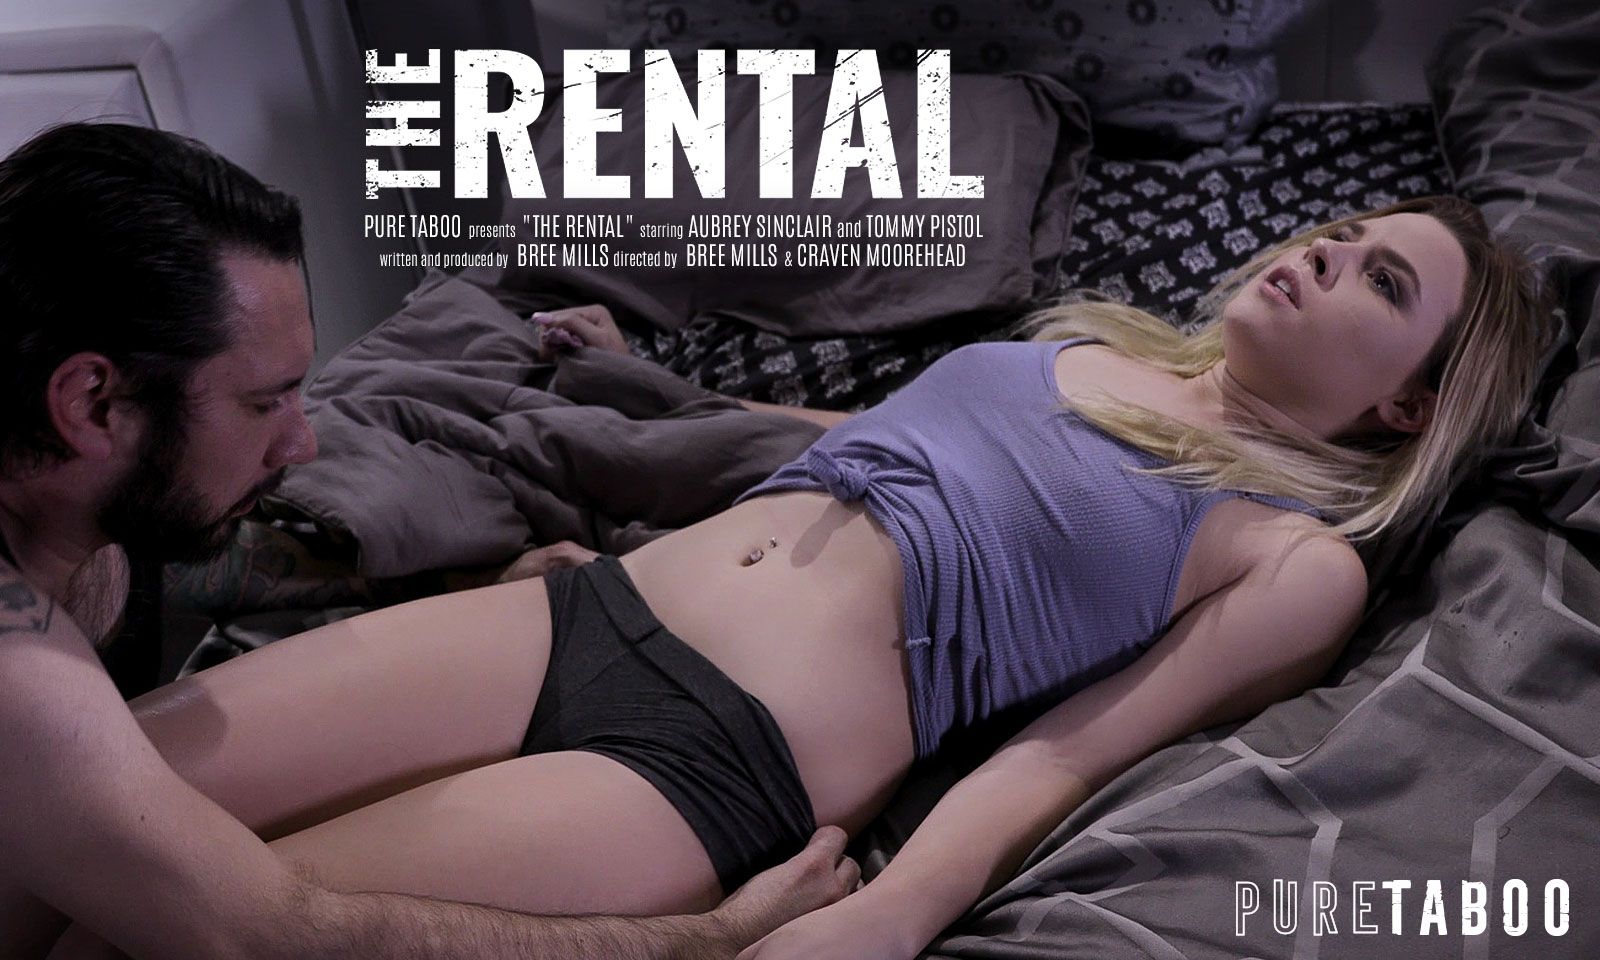 Pure Taboo Peeps into Aubrey Sinclair's Bedroom in 'The Rental' | AVN